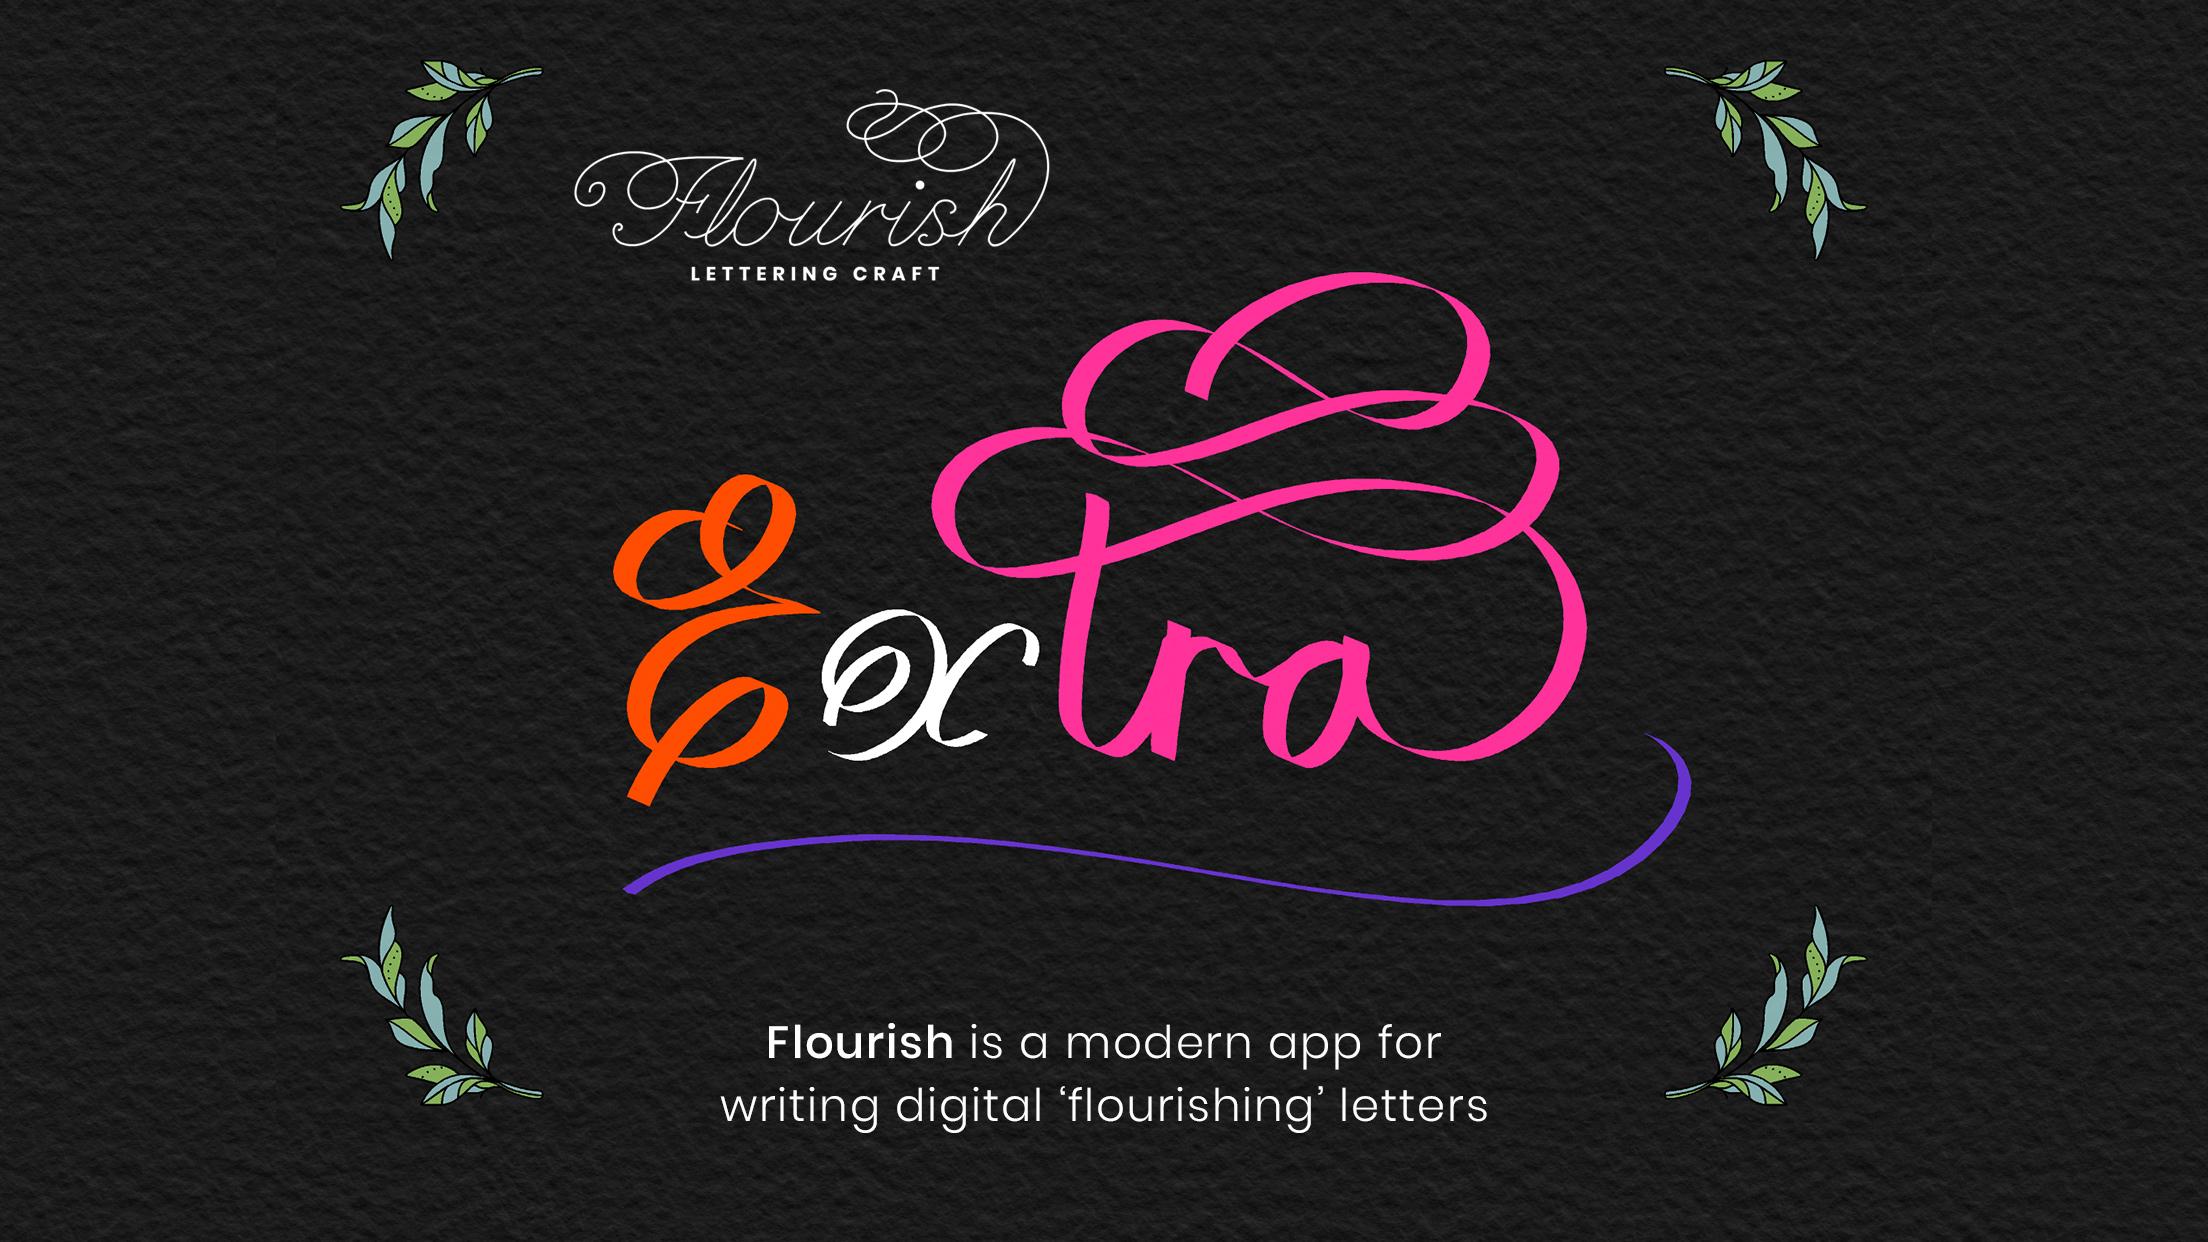 Flourish Calligraphy Lettering Craft 1.0.9 Screenshot 8